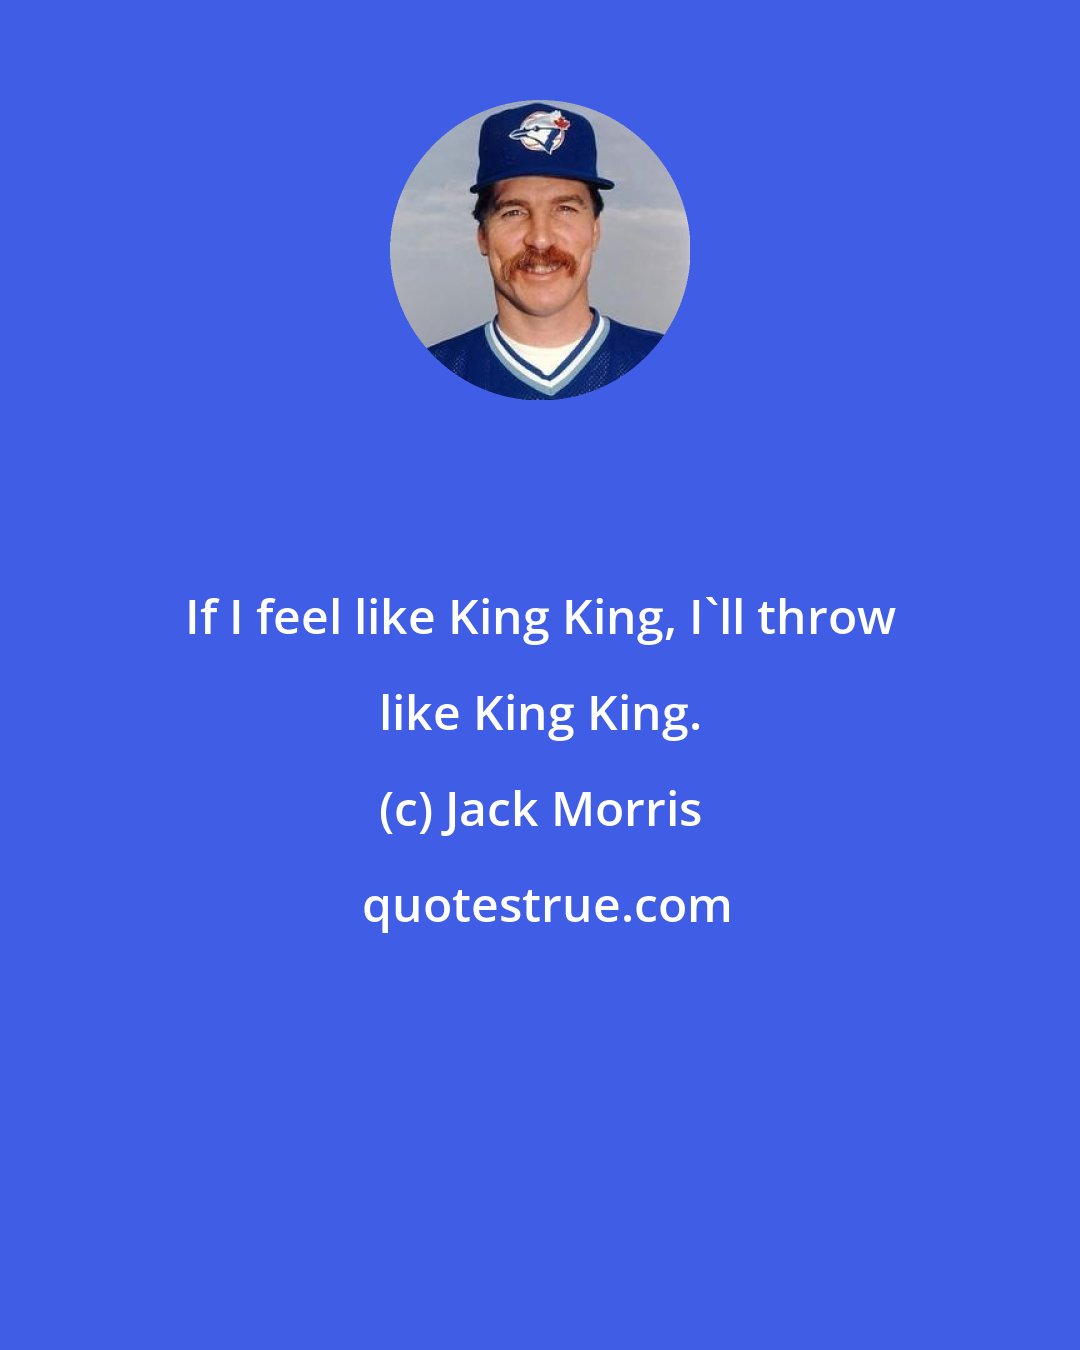 Jack Morris: If I feel like King King, I'll throw like King King.